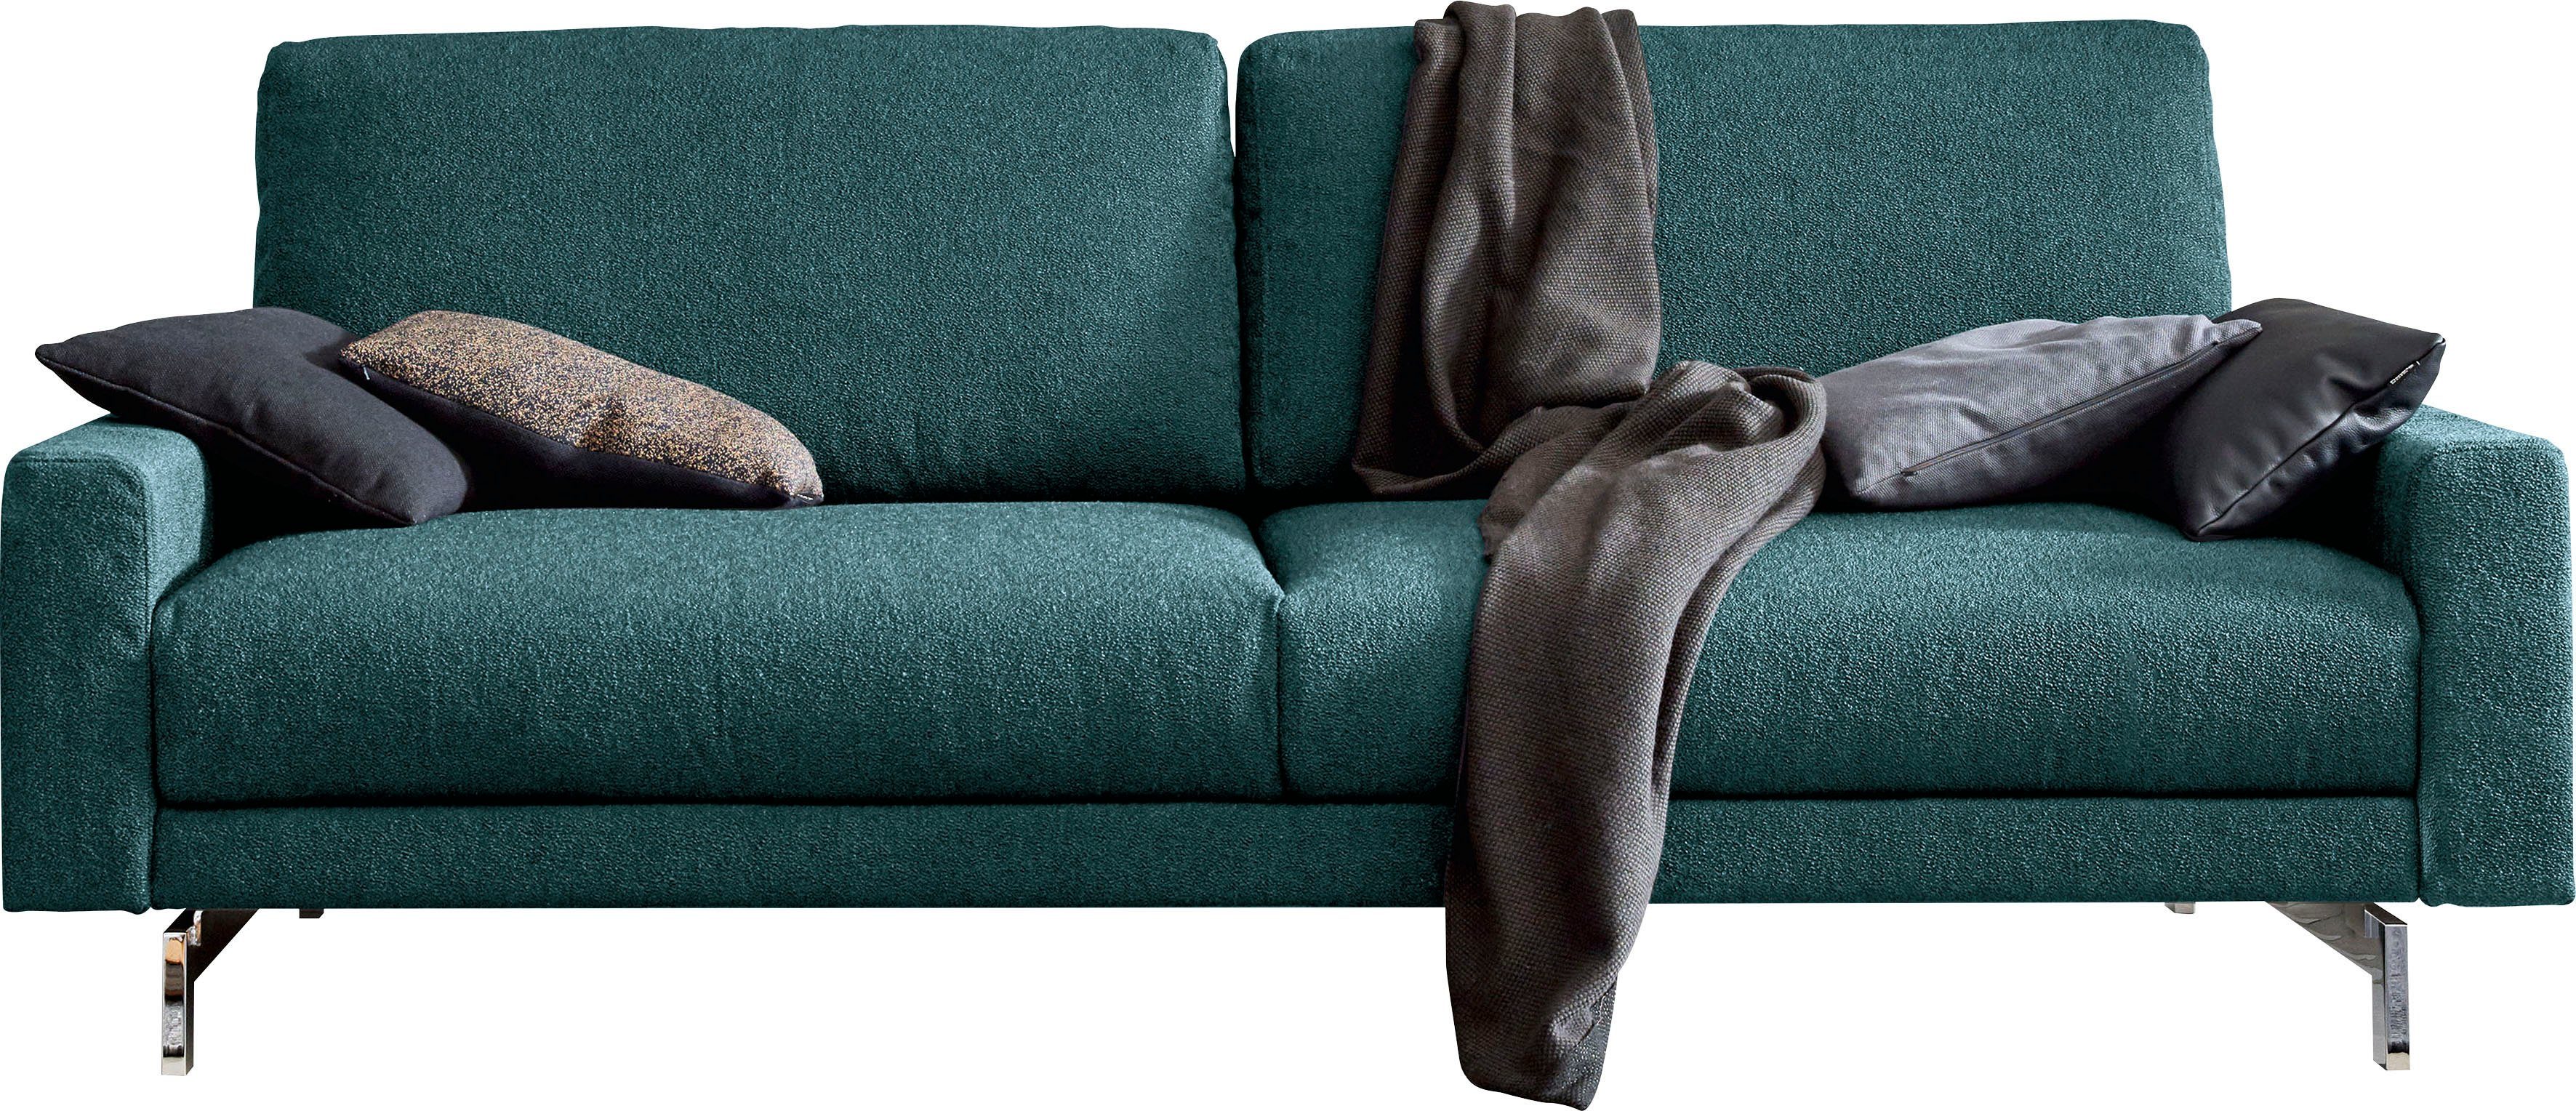 Armlehne Fuß Breite niedrig, glänzend, sofa 164 hülsta chromfarben cm 2-Sitzer hs.450,